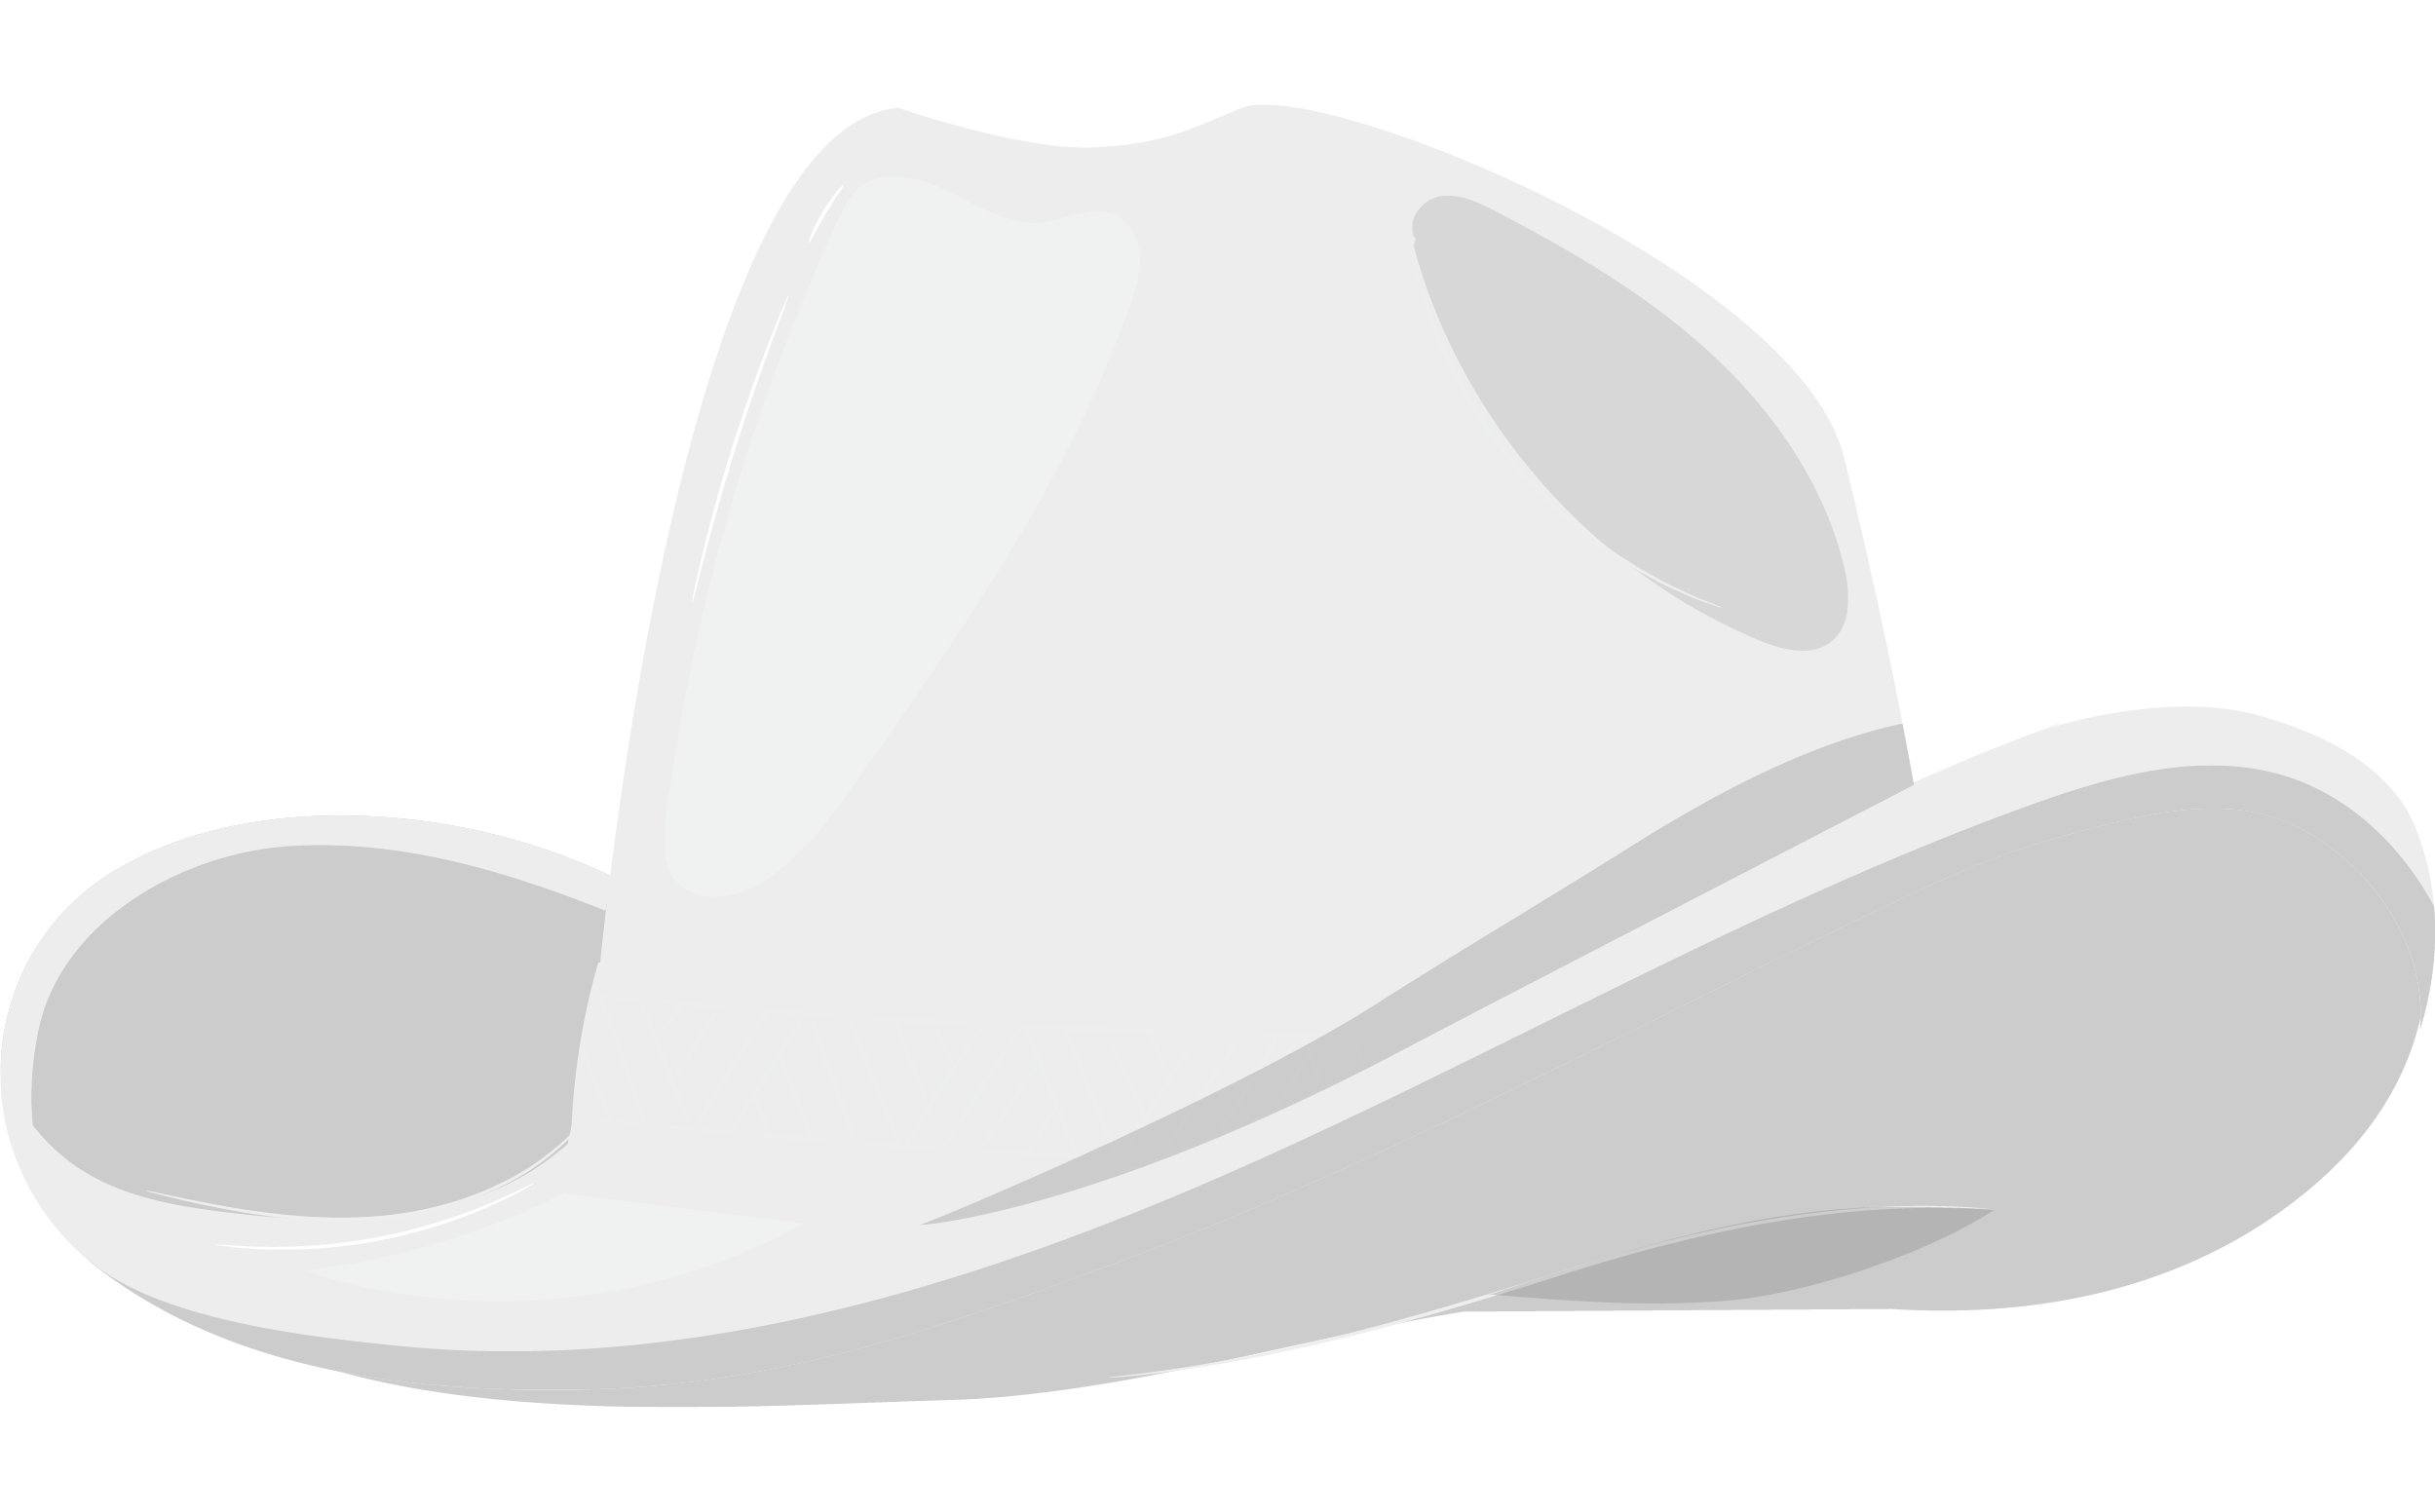 fedora hat